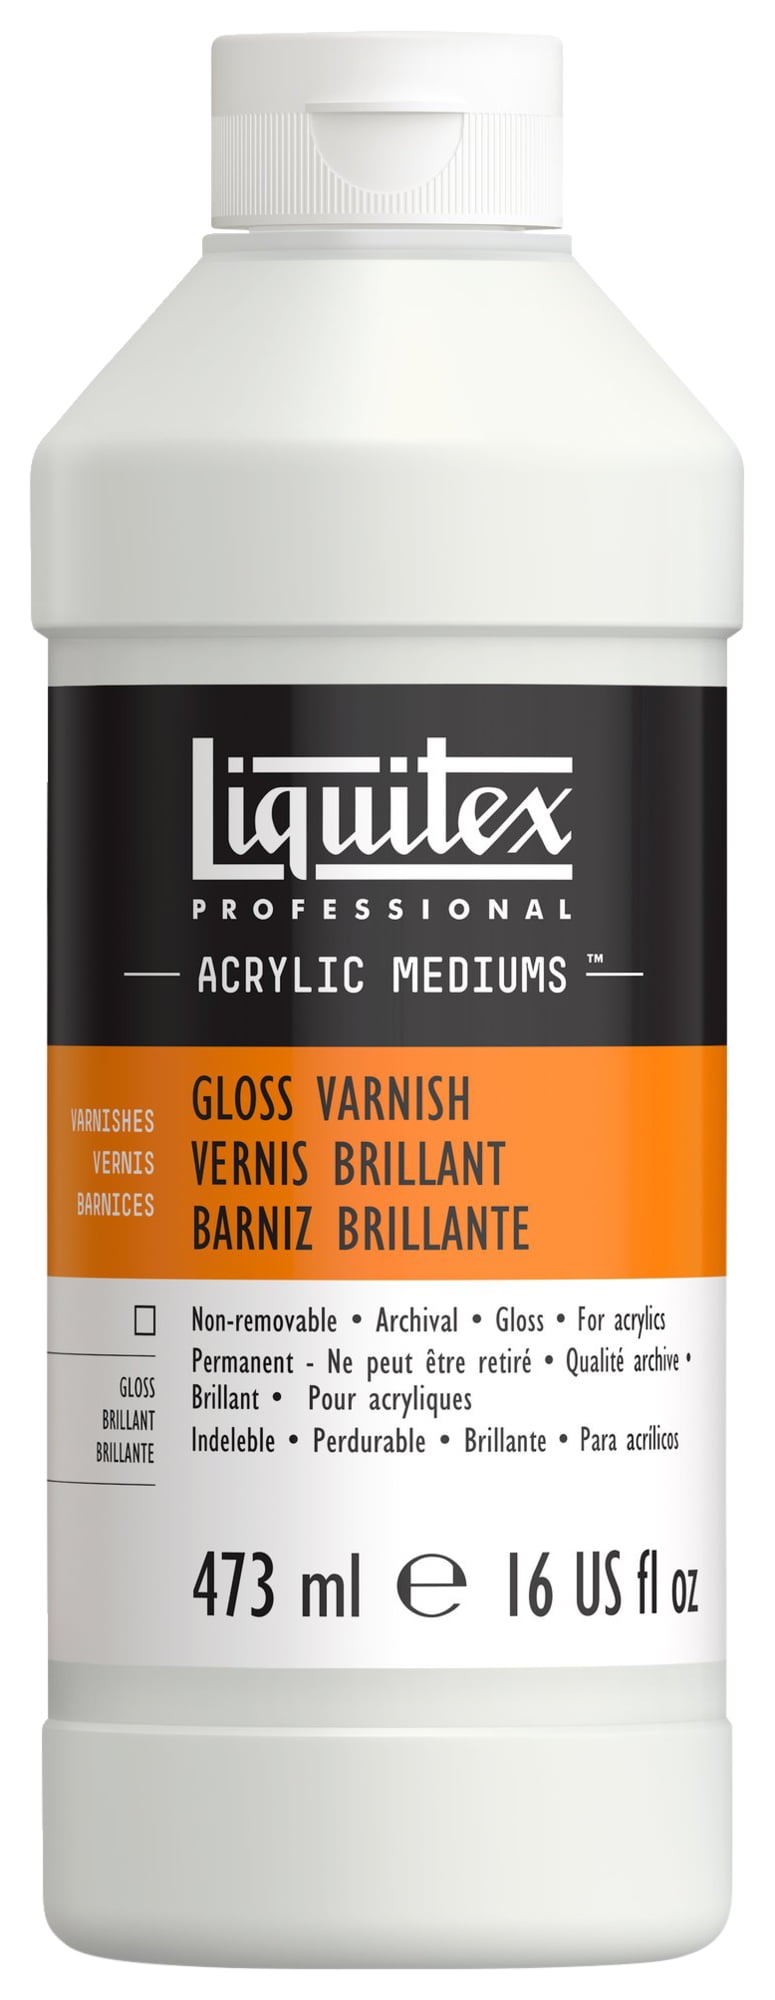 473) Liquitex varnish review gloss vs. Matte 